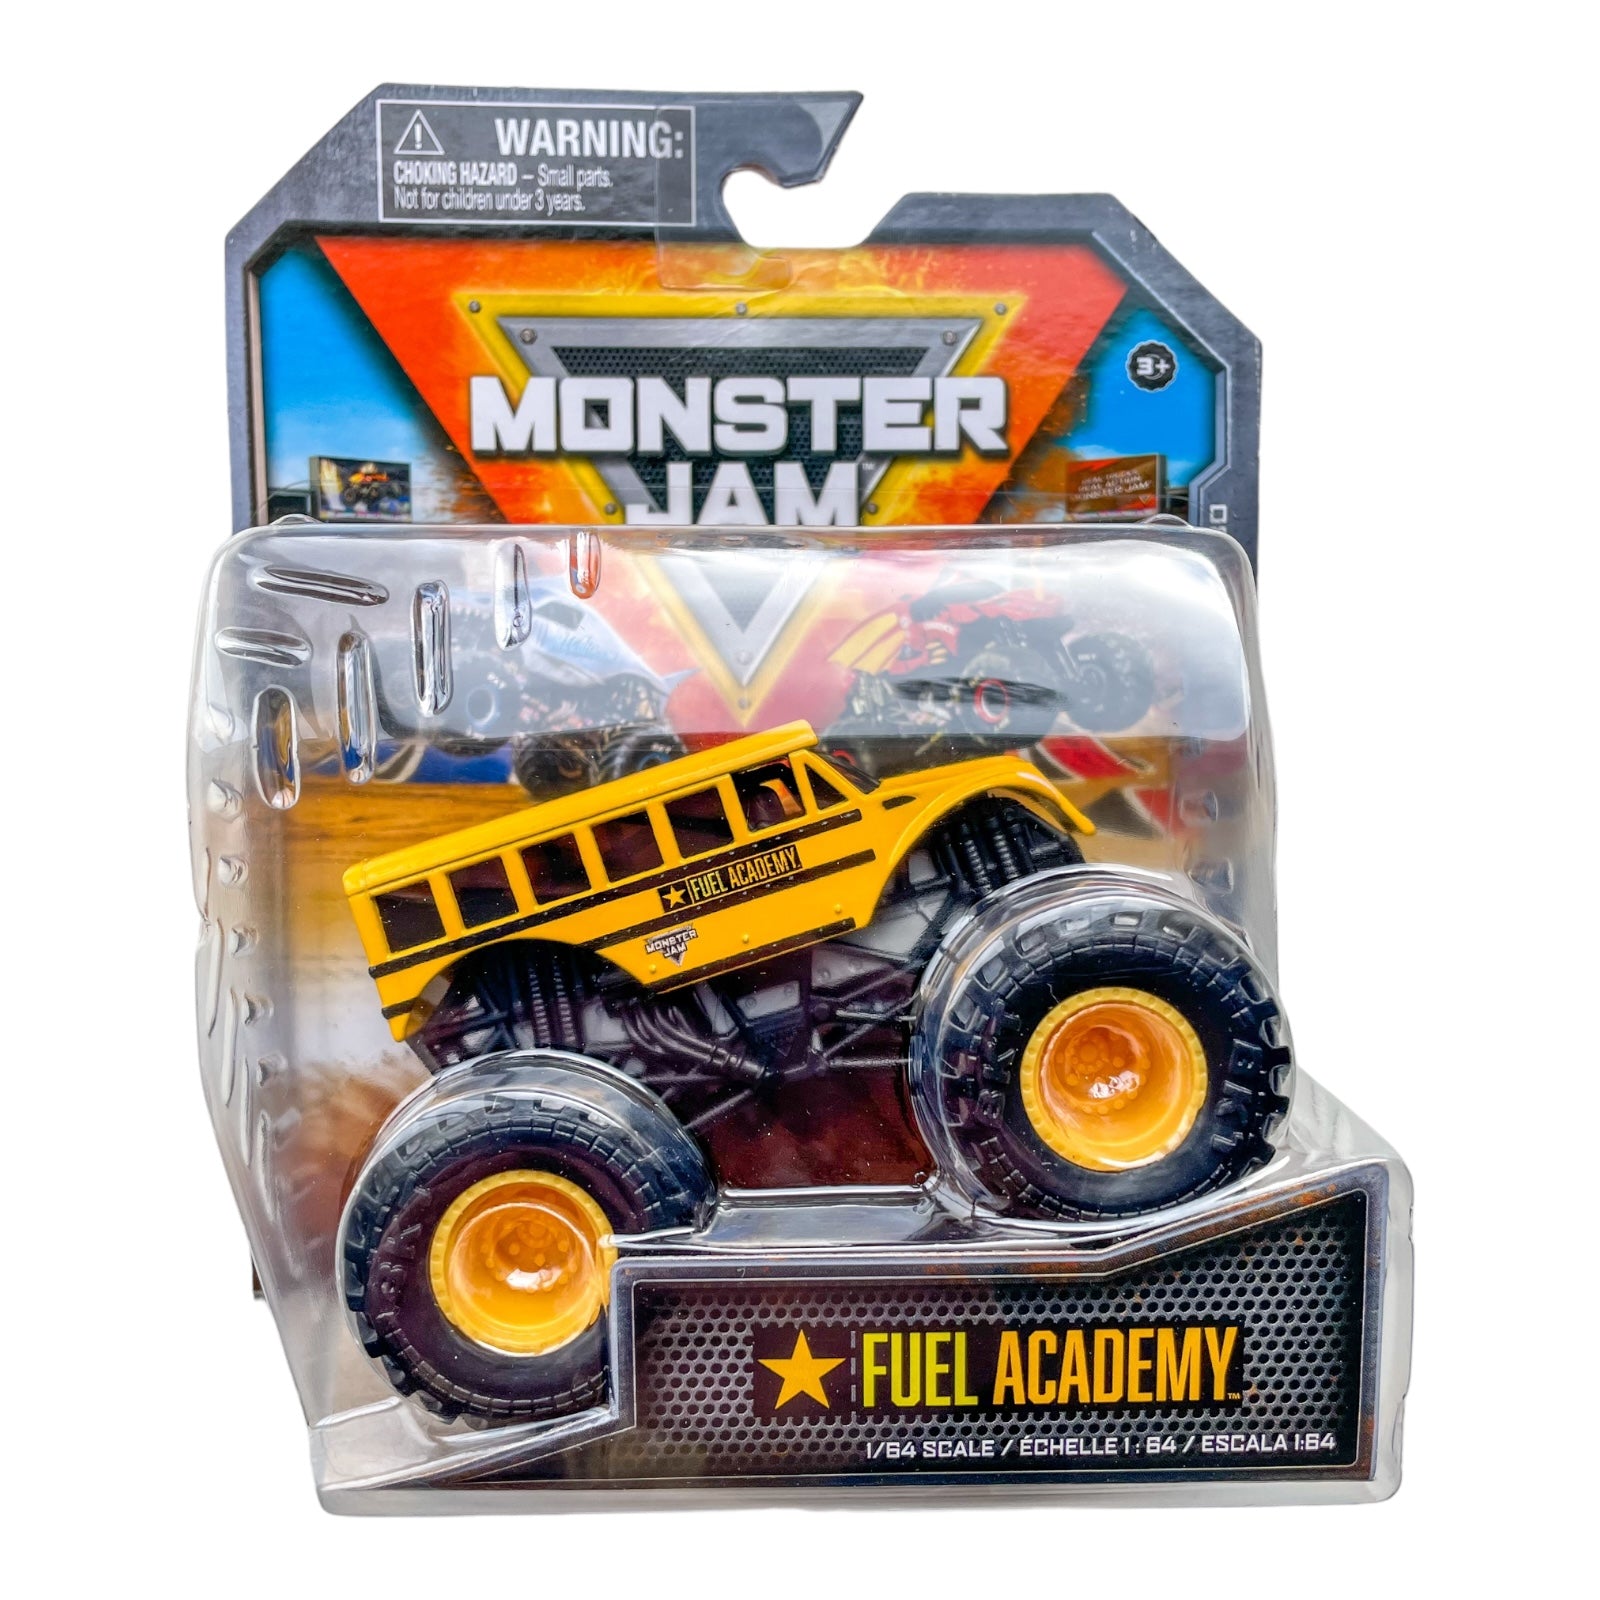 Monster Jam Die-Cast Vehicle 1:64 Scale Fuel Academy Monster Jam